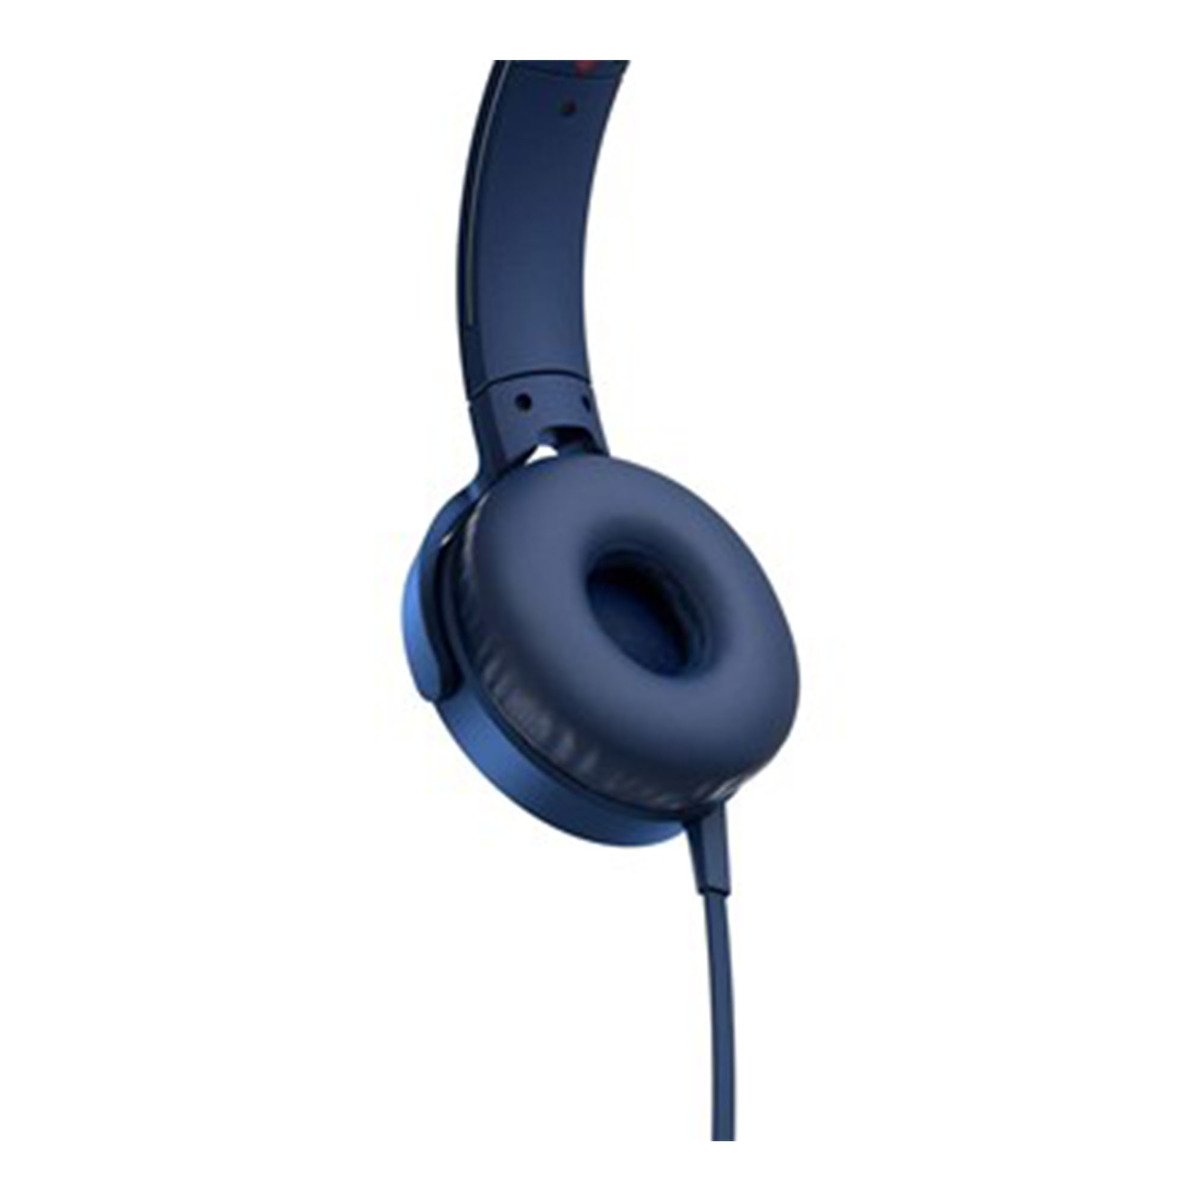 Sony Headphone With Mic MDRXB550AP Blue